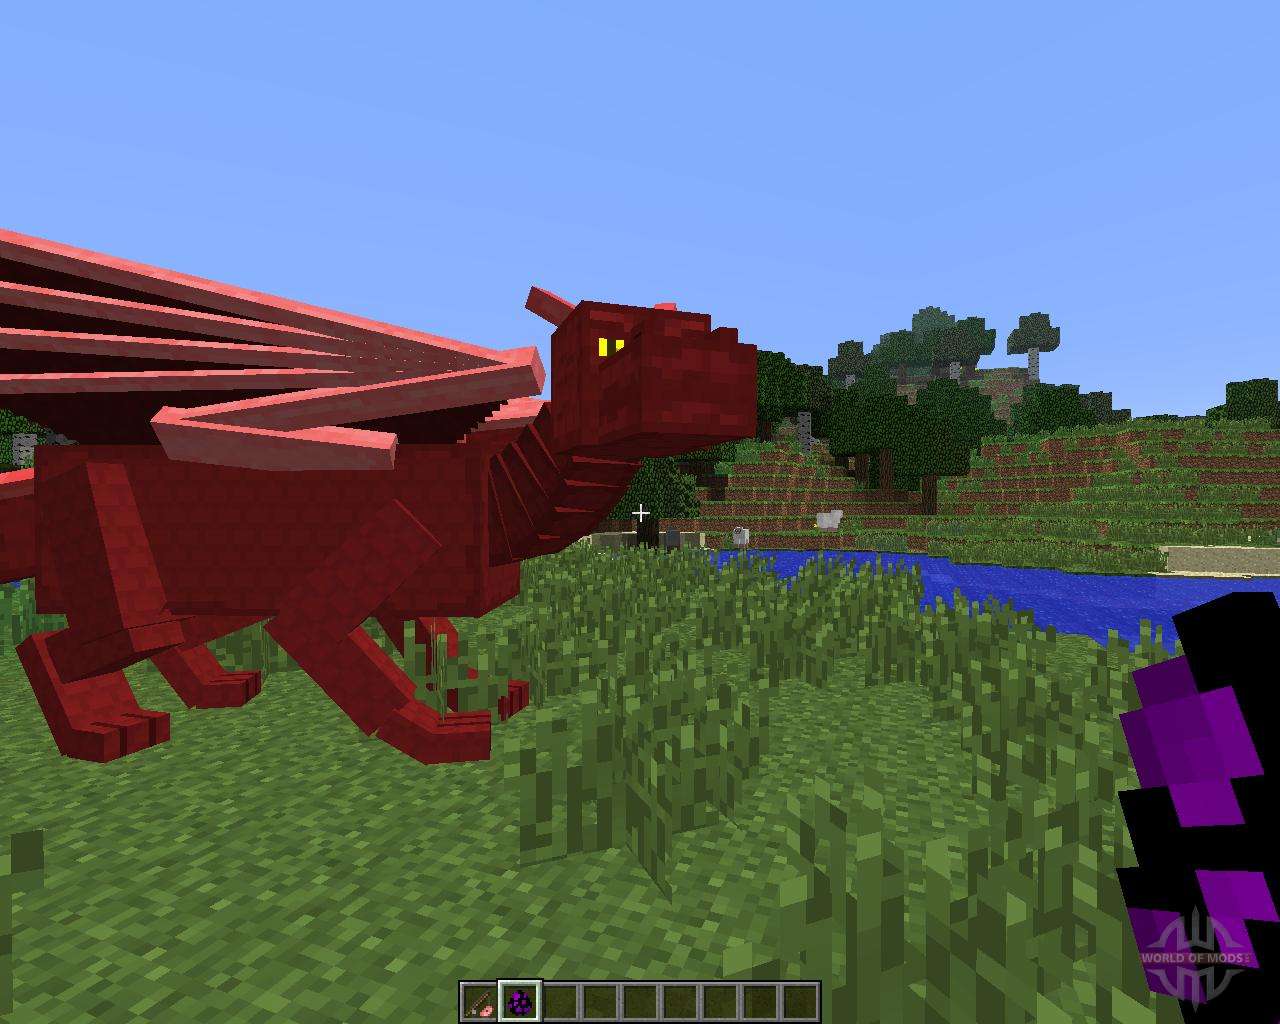 Minecrraft Dragon Image - My minecraft dragon : Minecraft : Pump action ...